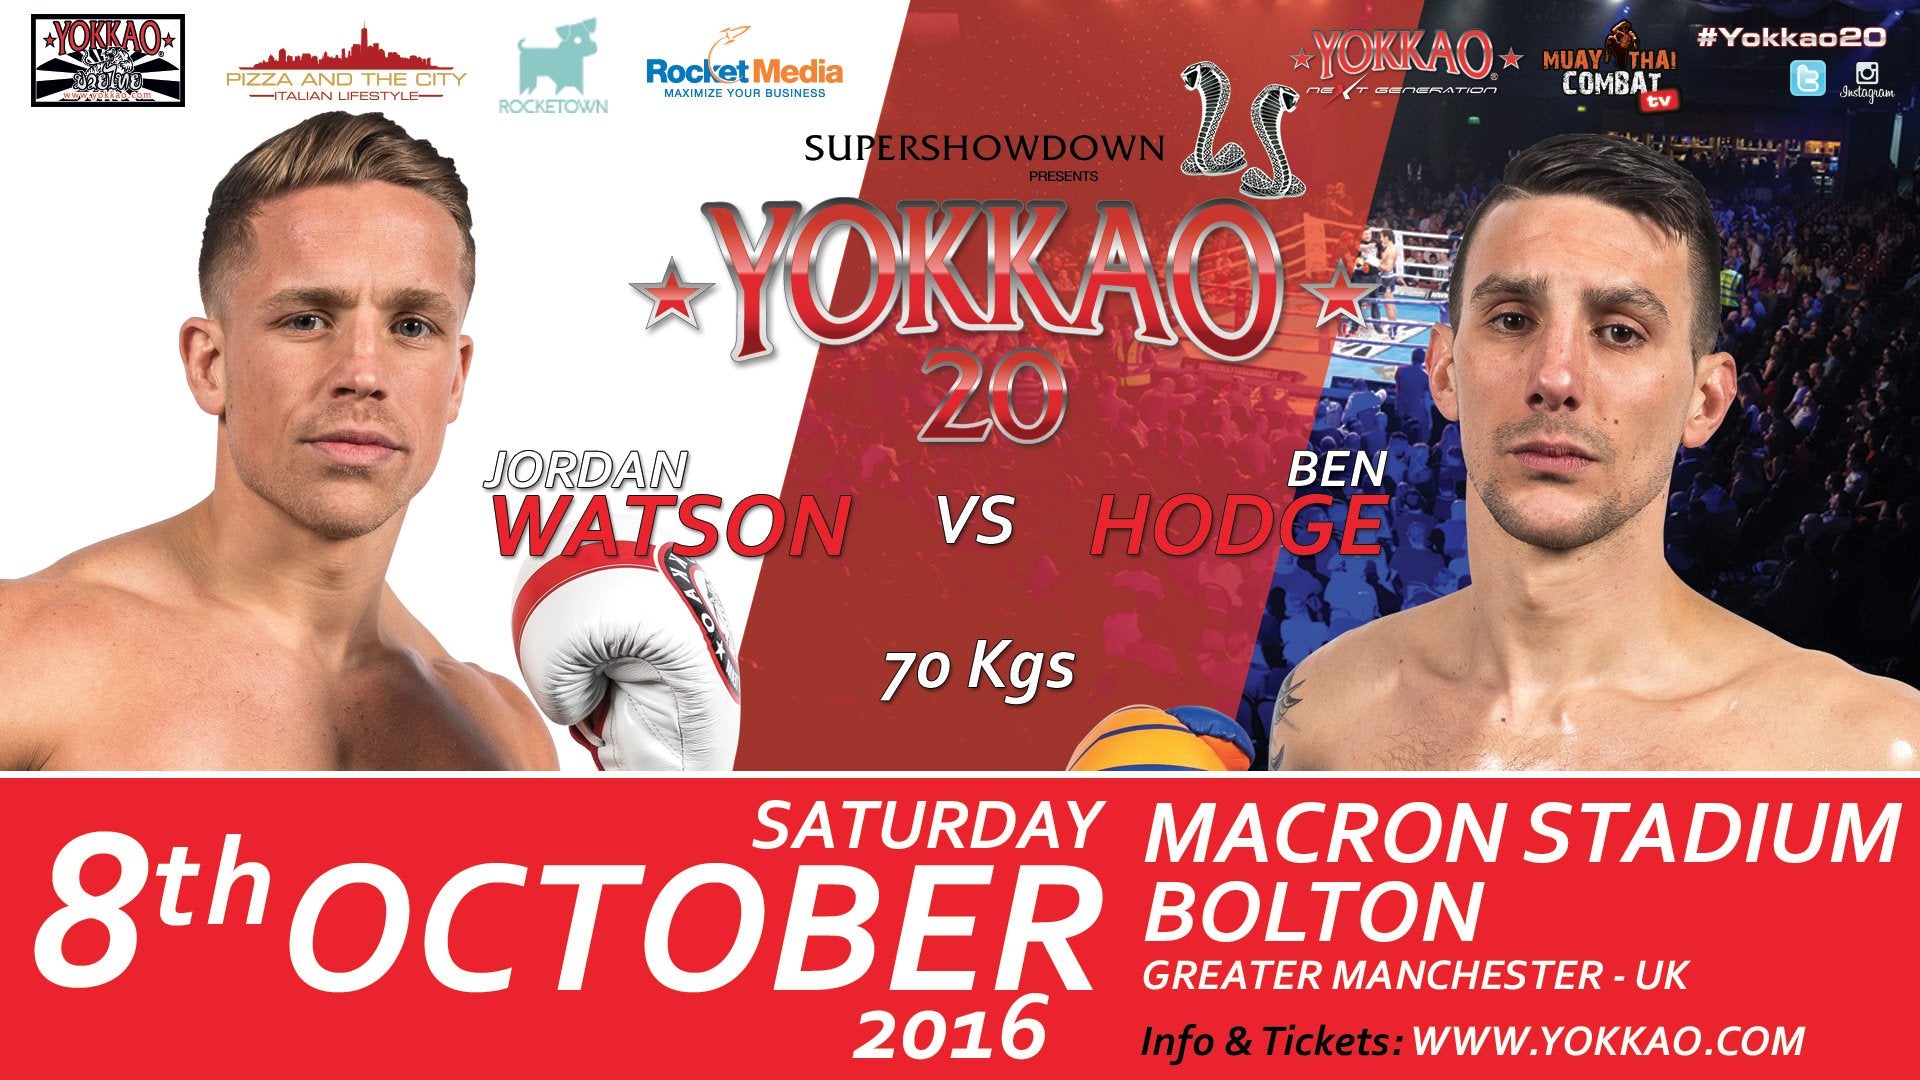 Jordan Watson to fight Ben Hodge at YOKKAO 20!